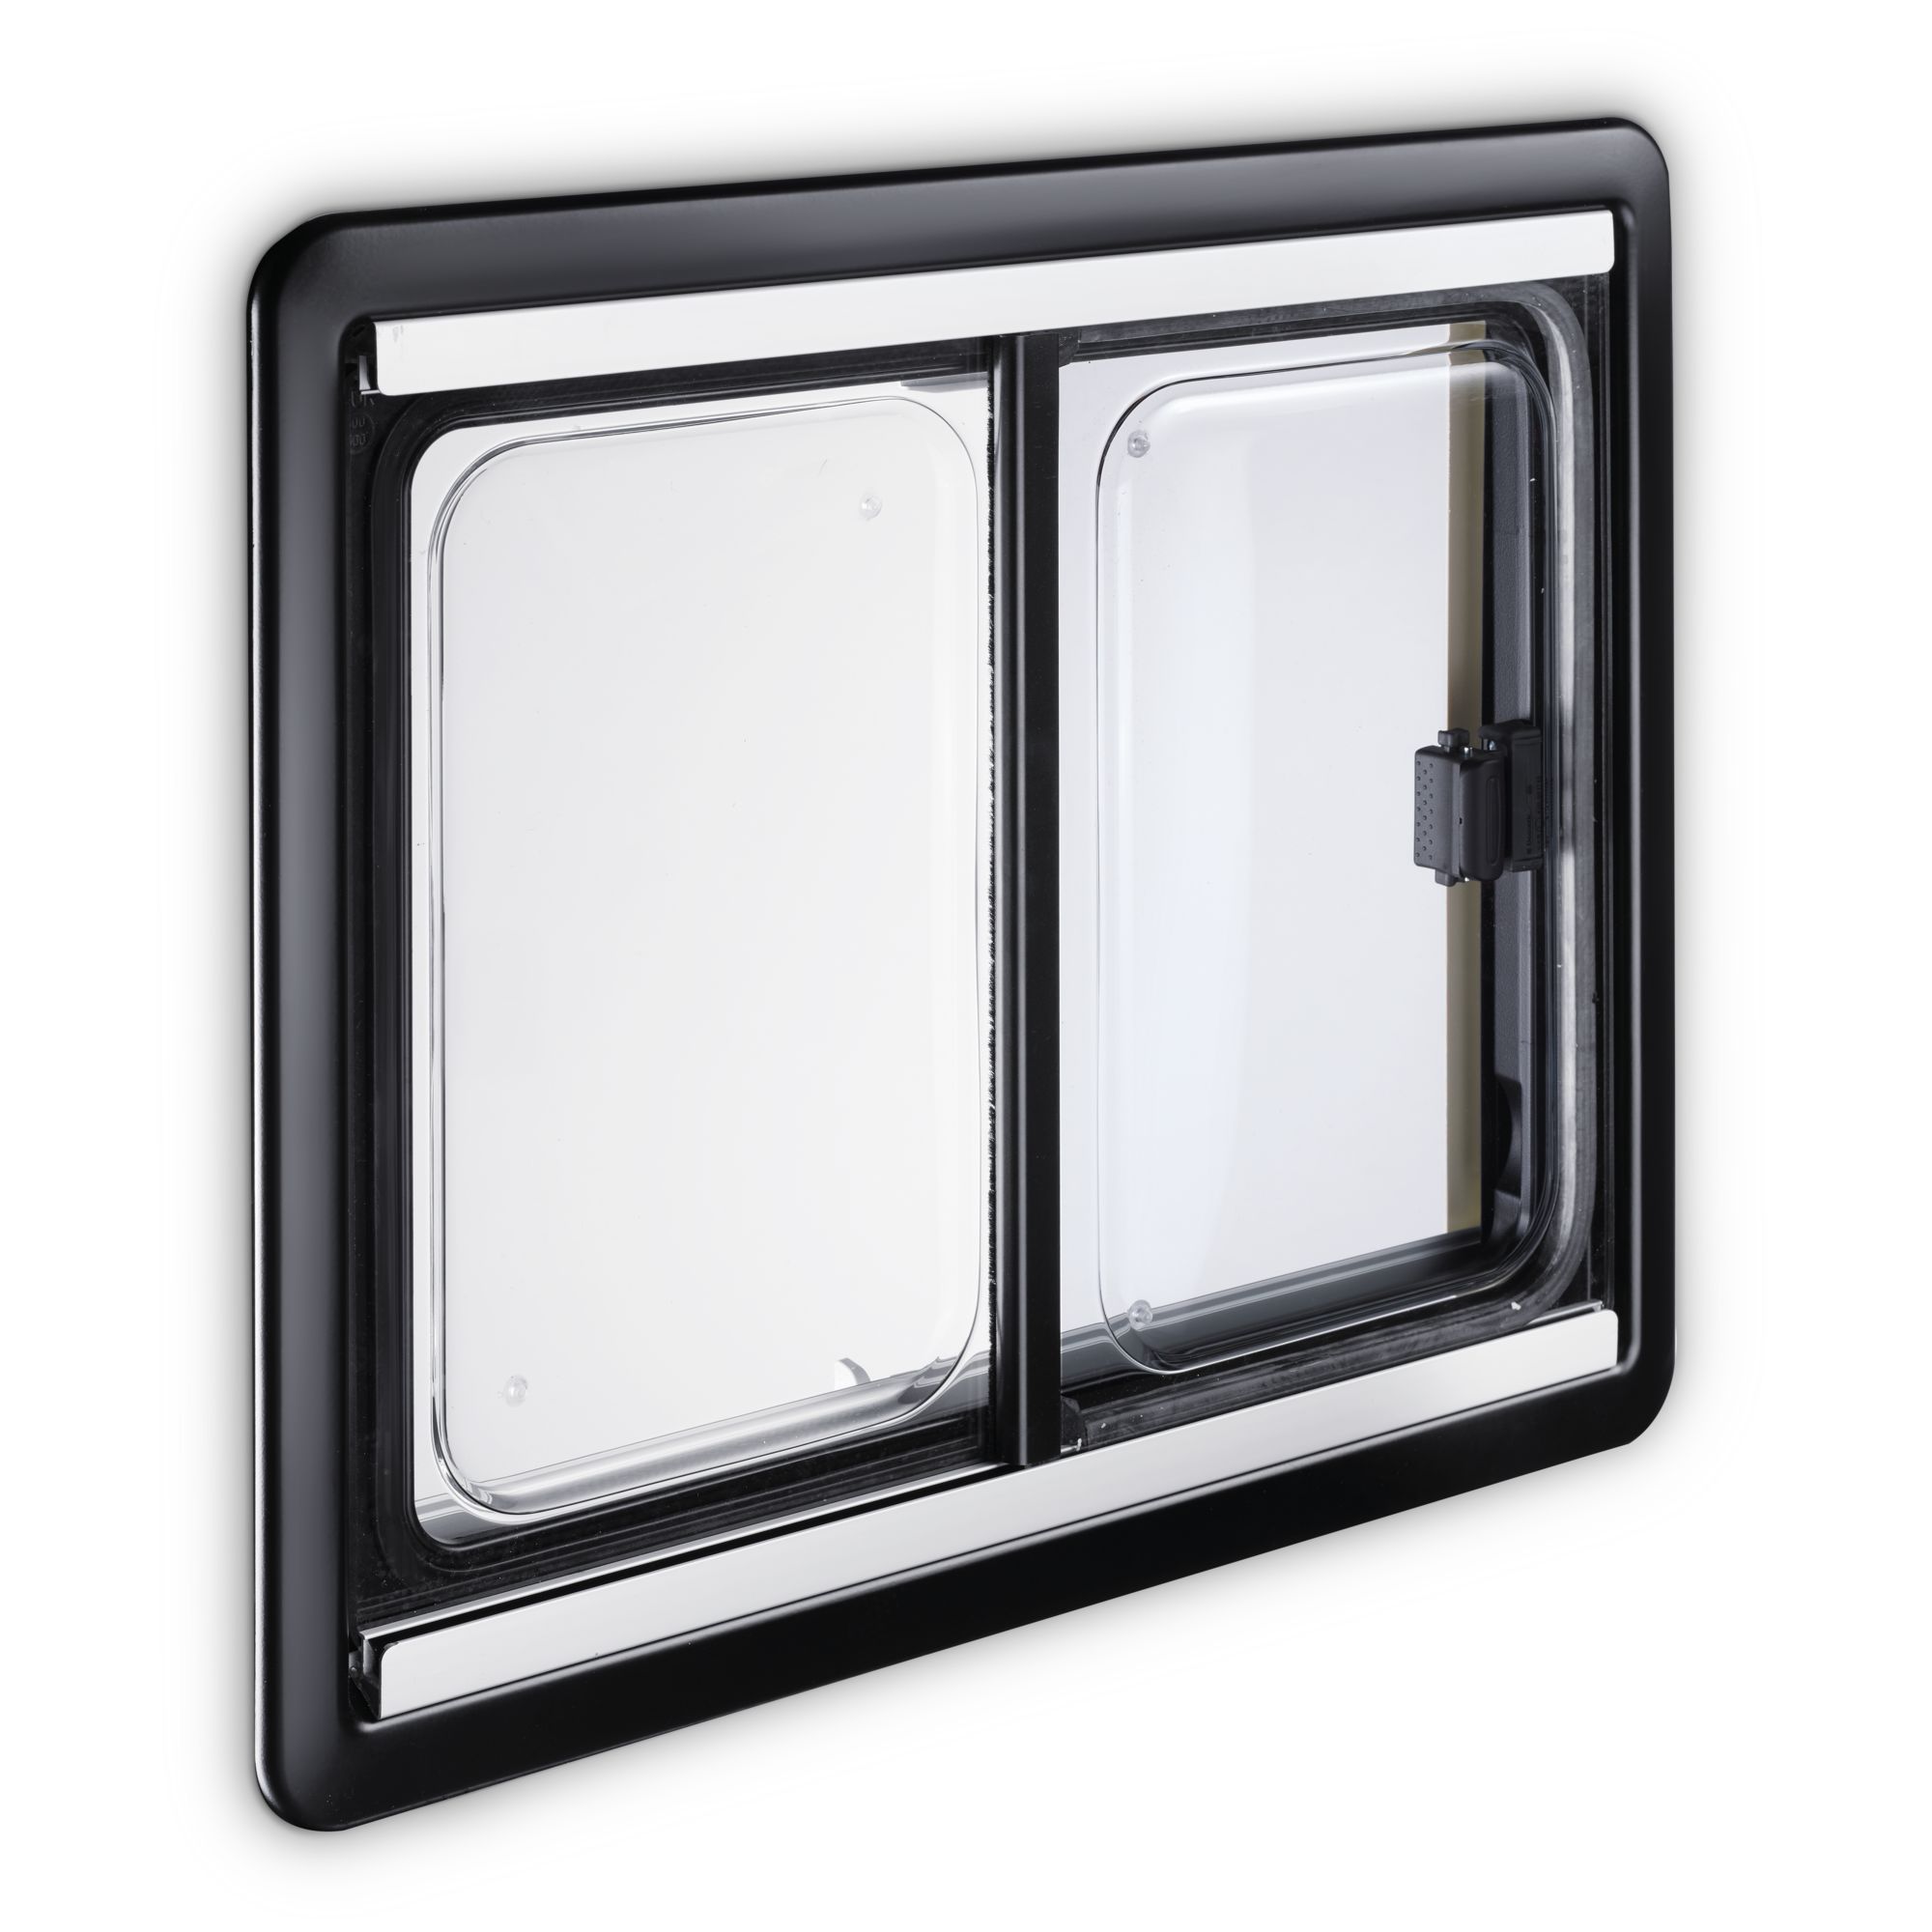 Окно для кемпера. Окна Dometic-Seitz s4. Окно откидное Dometic/Seitz s4 ШХВ: 600x500мм. Окно сдвижное Dometic 1200. Откидные окна Dometic для автодома.